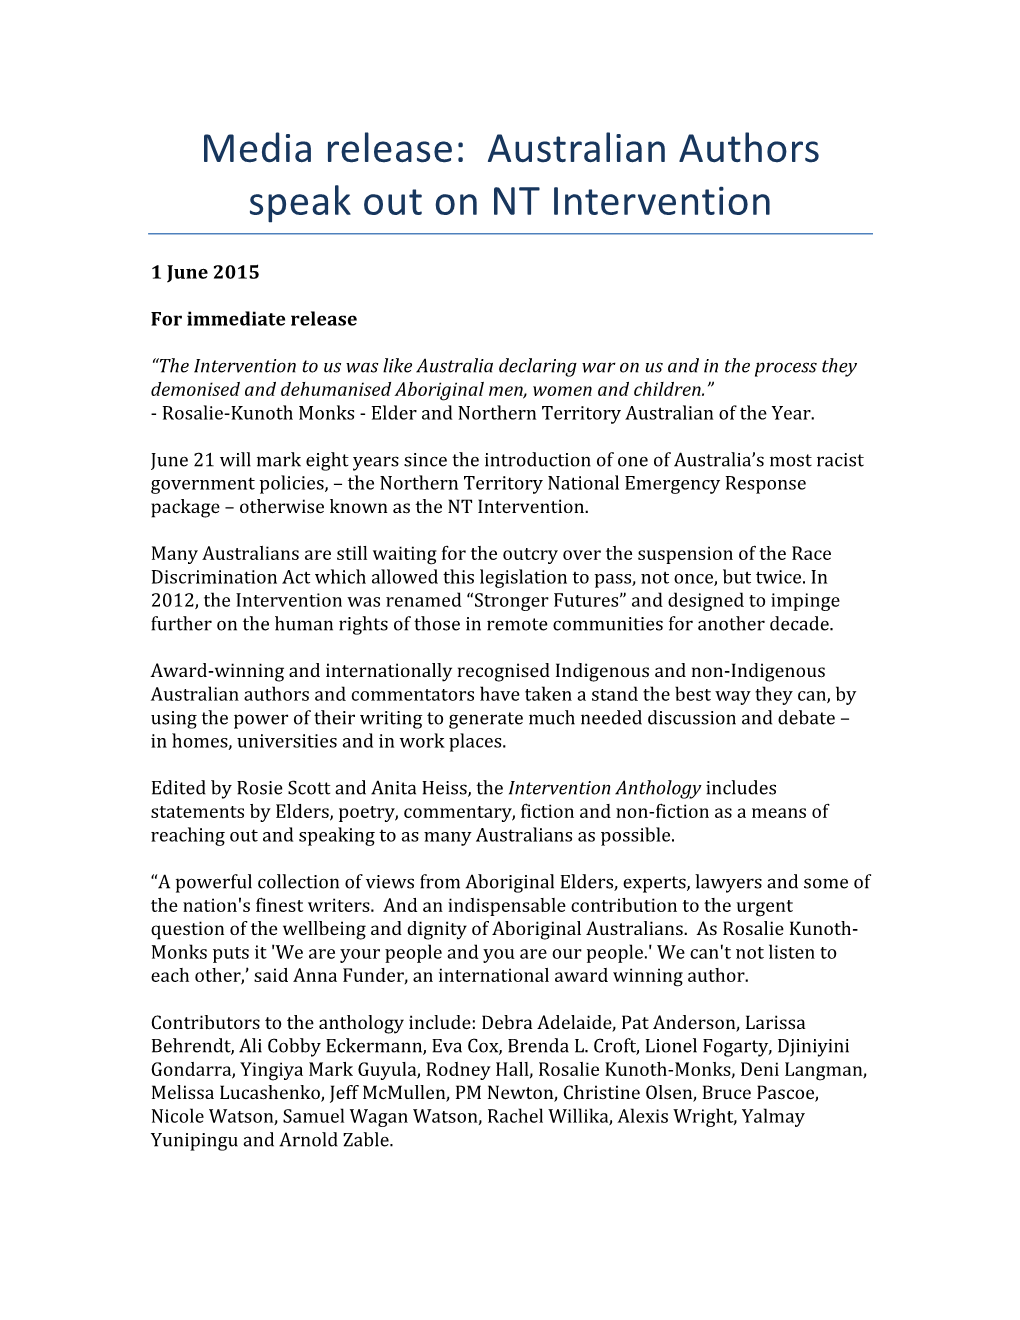 Media Release Australian Authors Speak out on NT Intervention